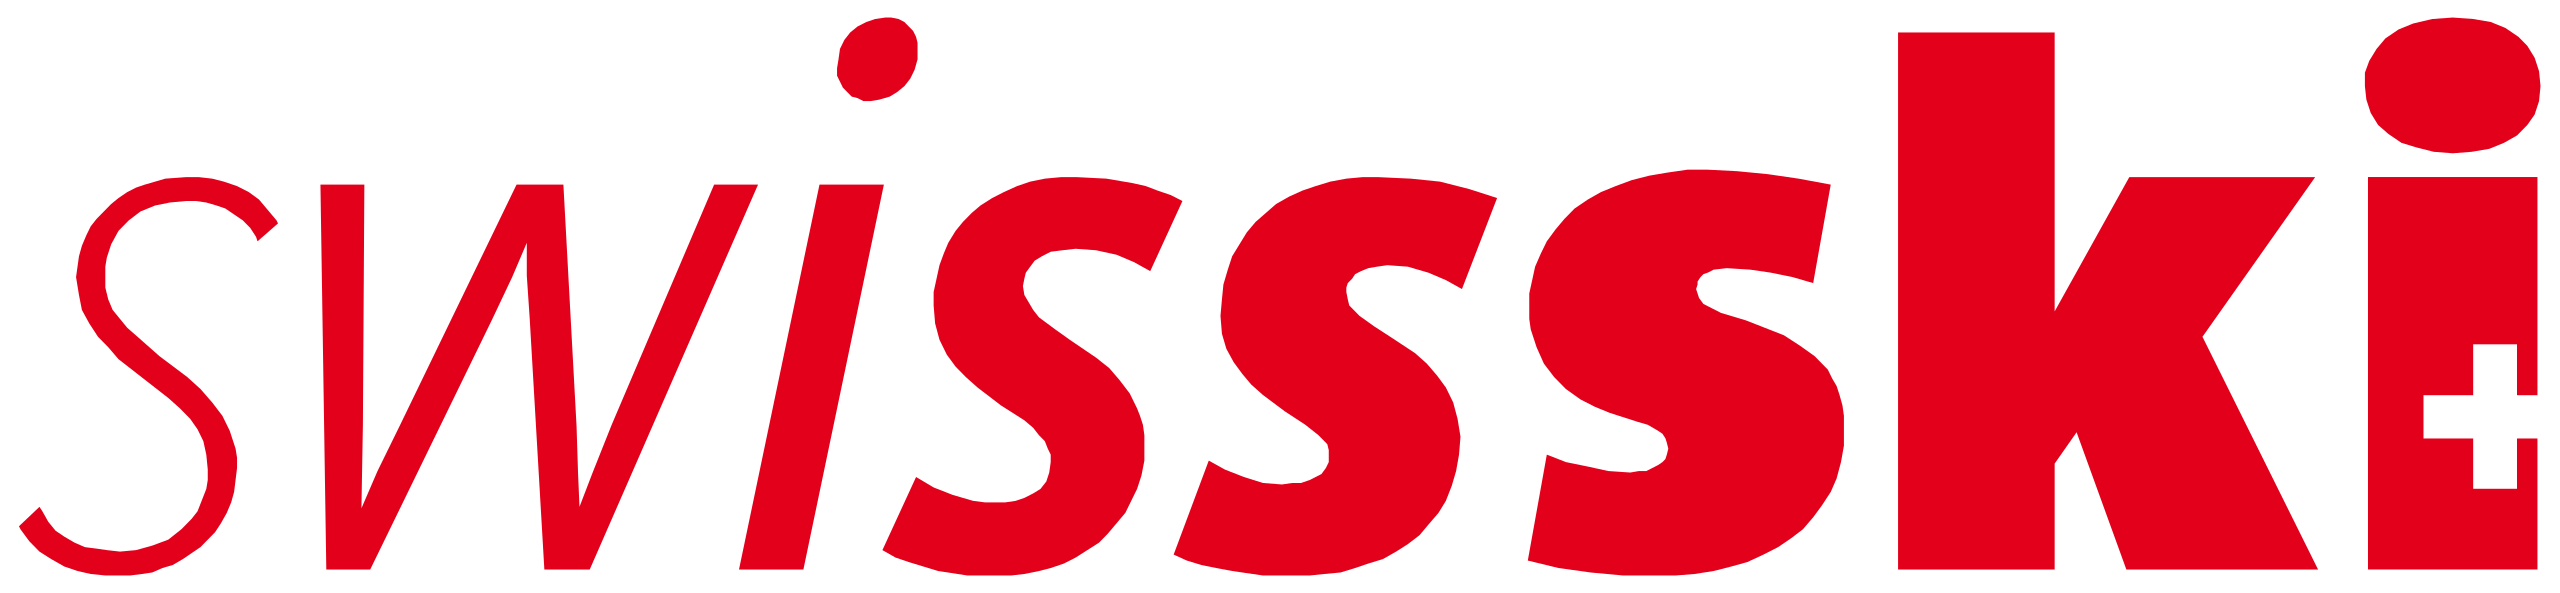 Swiss Ski Logo